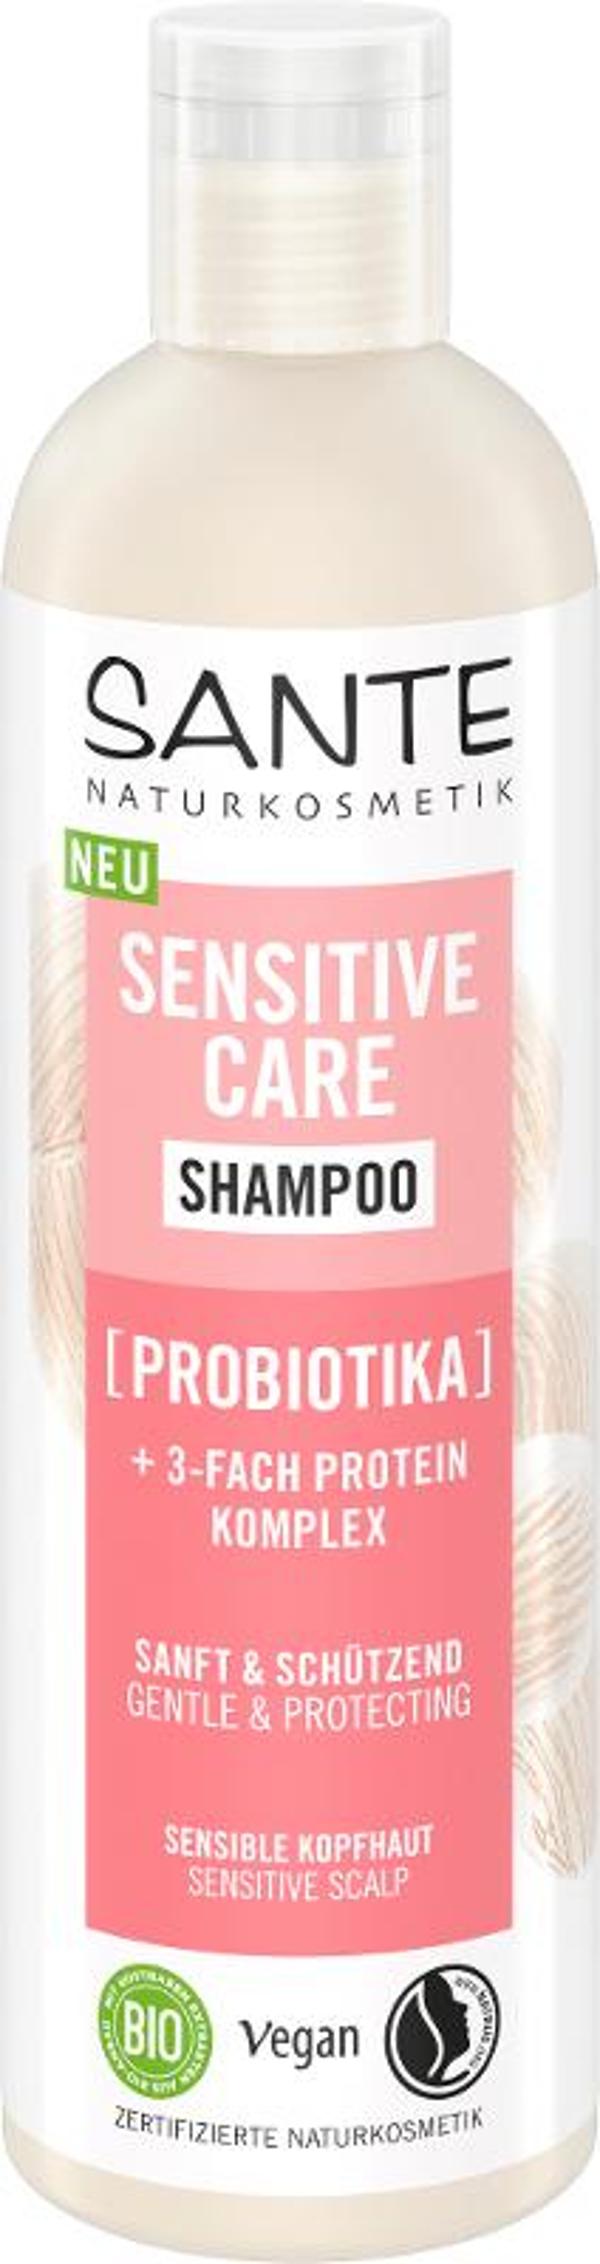 Produktfoto zu Sensitive Care Shampoo Probiotika 250ml Sante